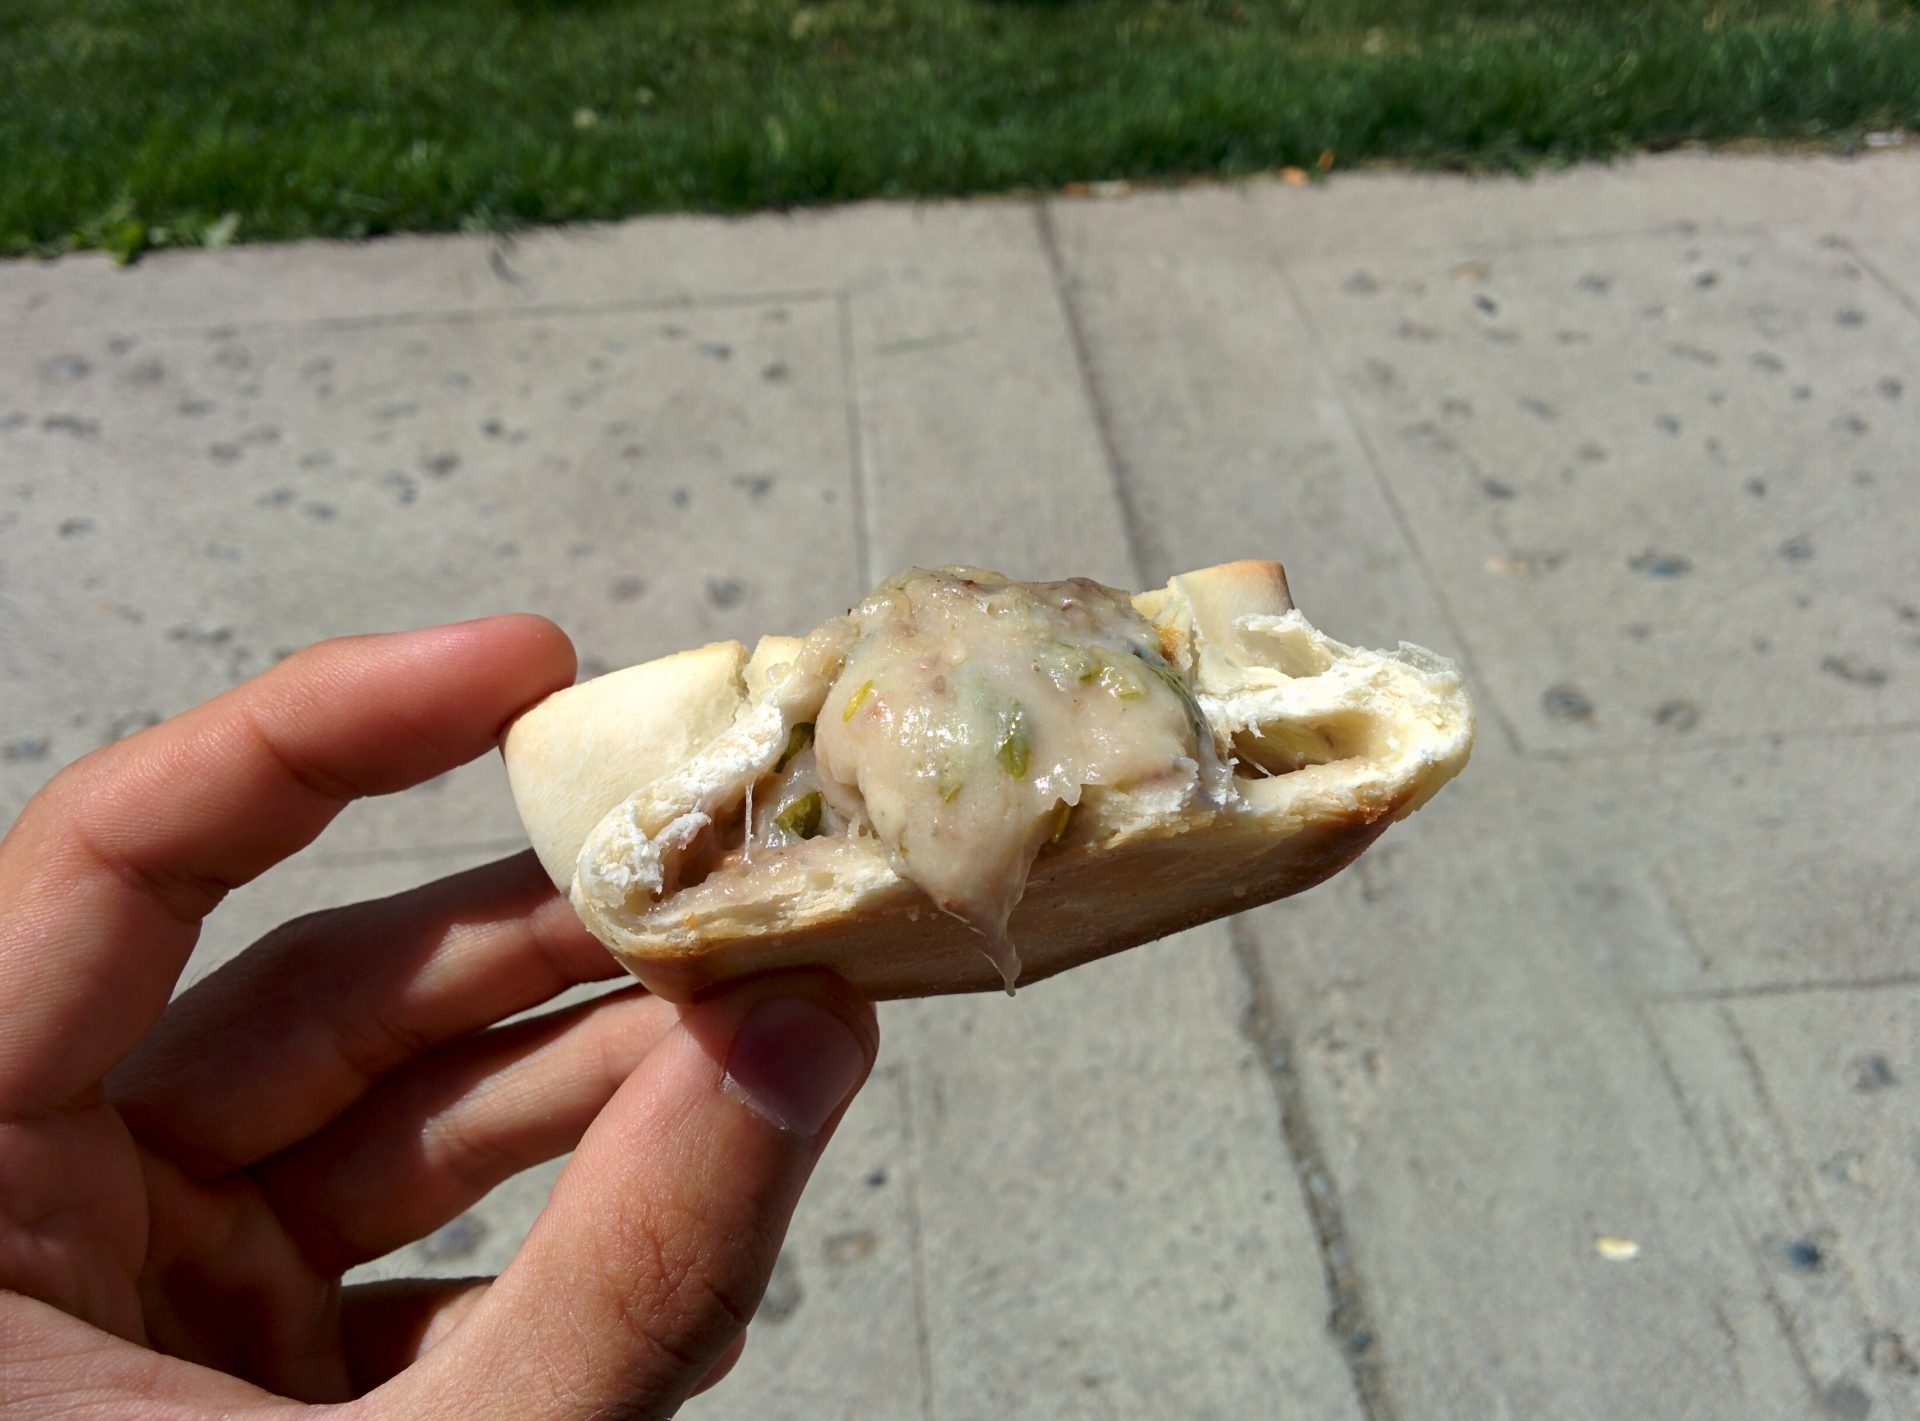 An Empanada with cheese